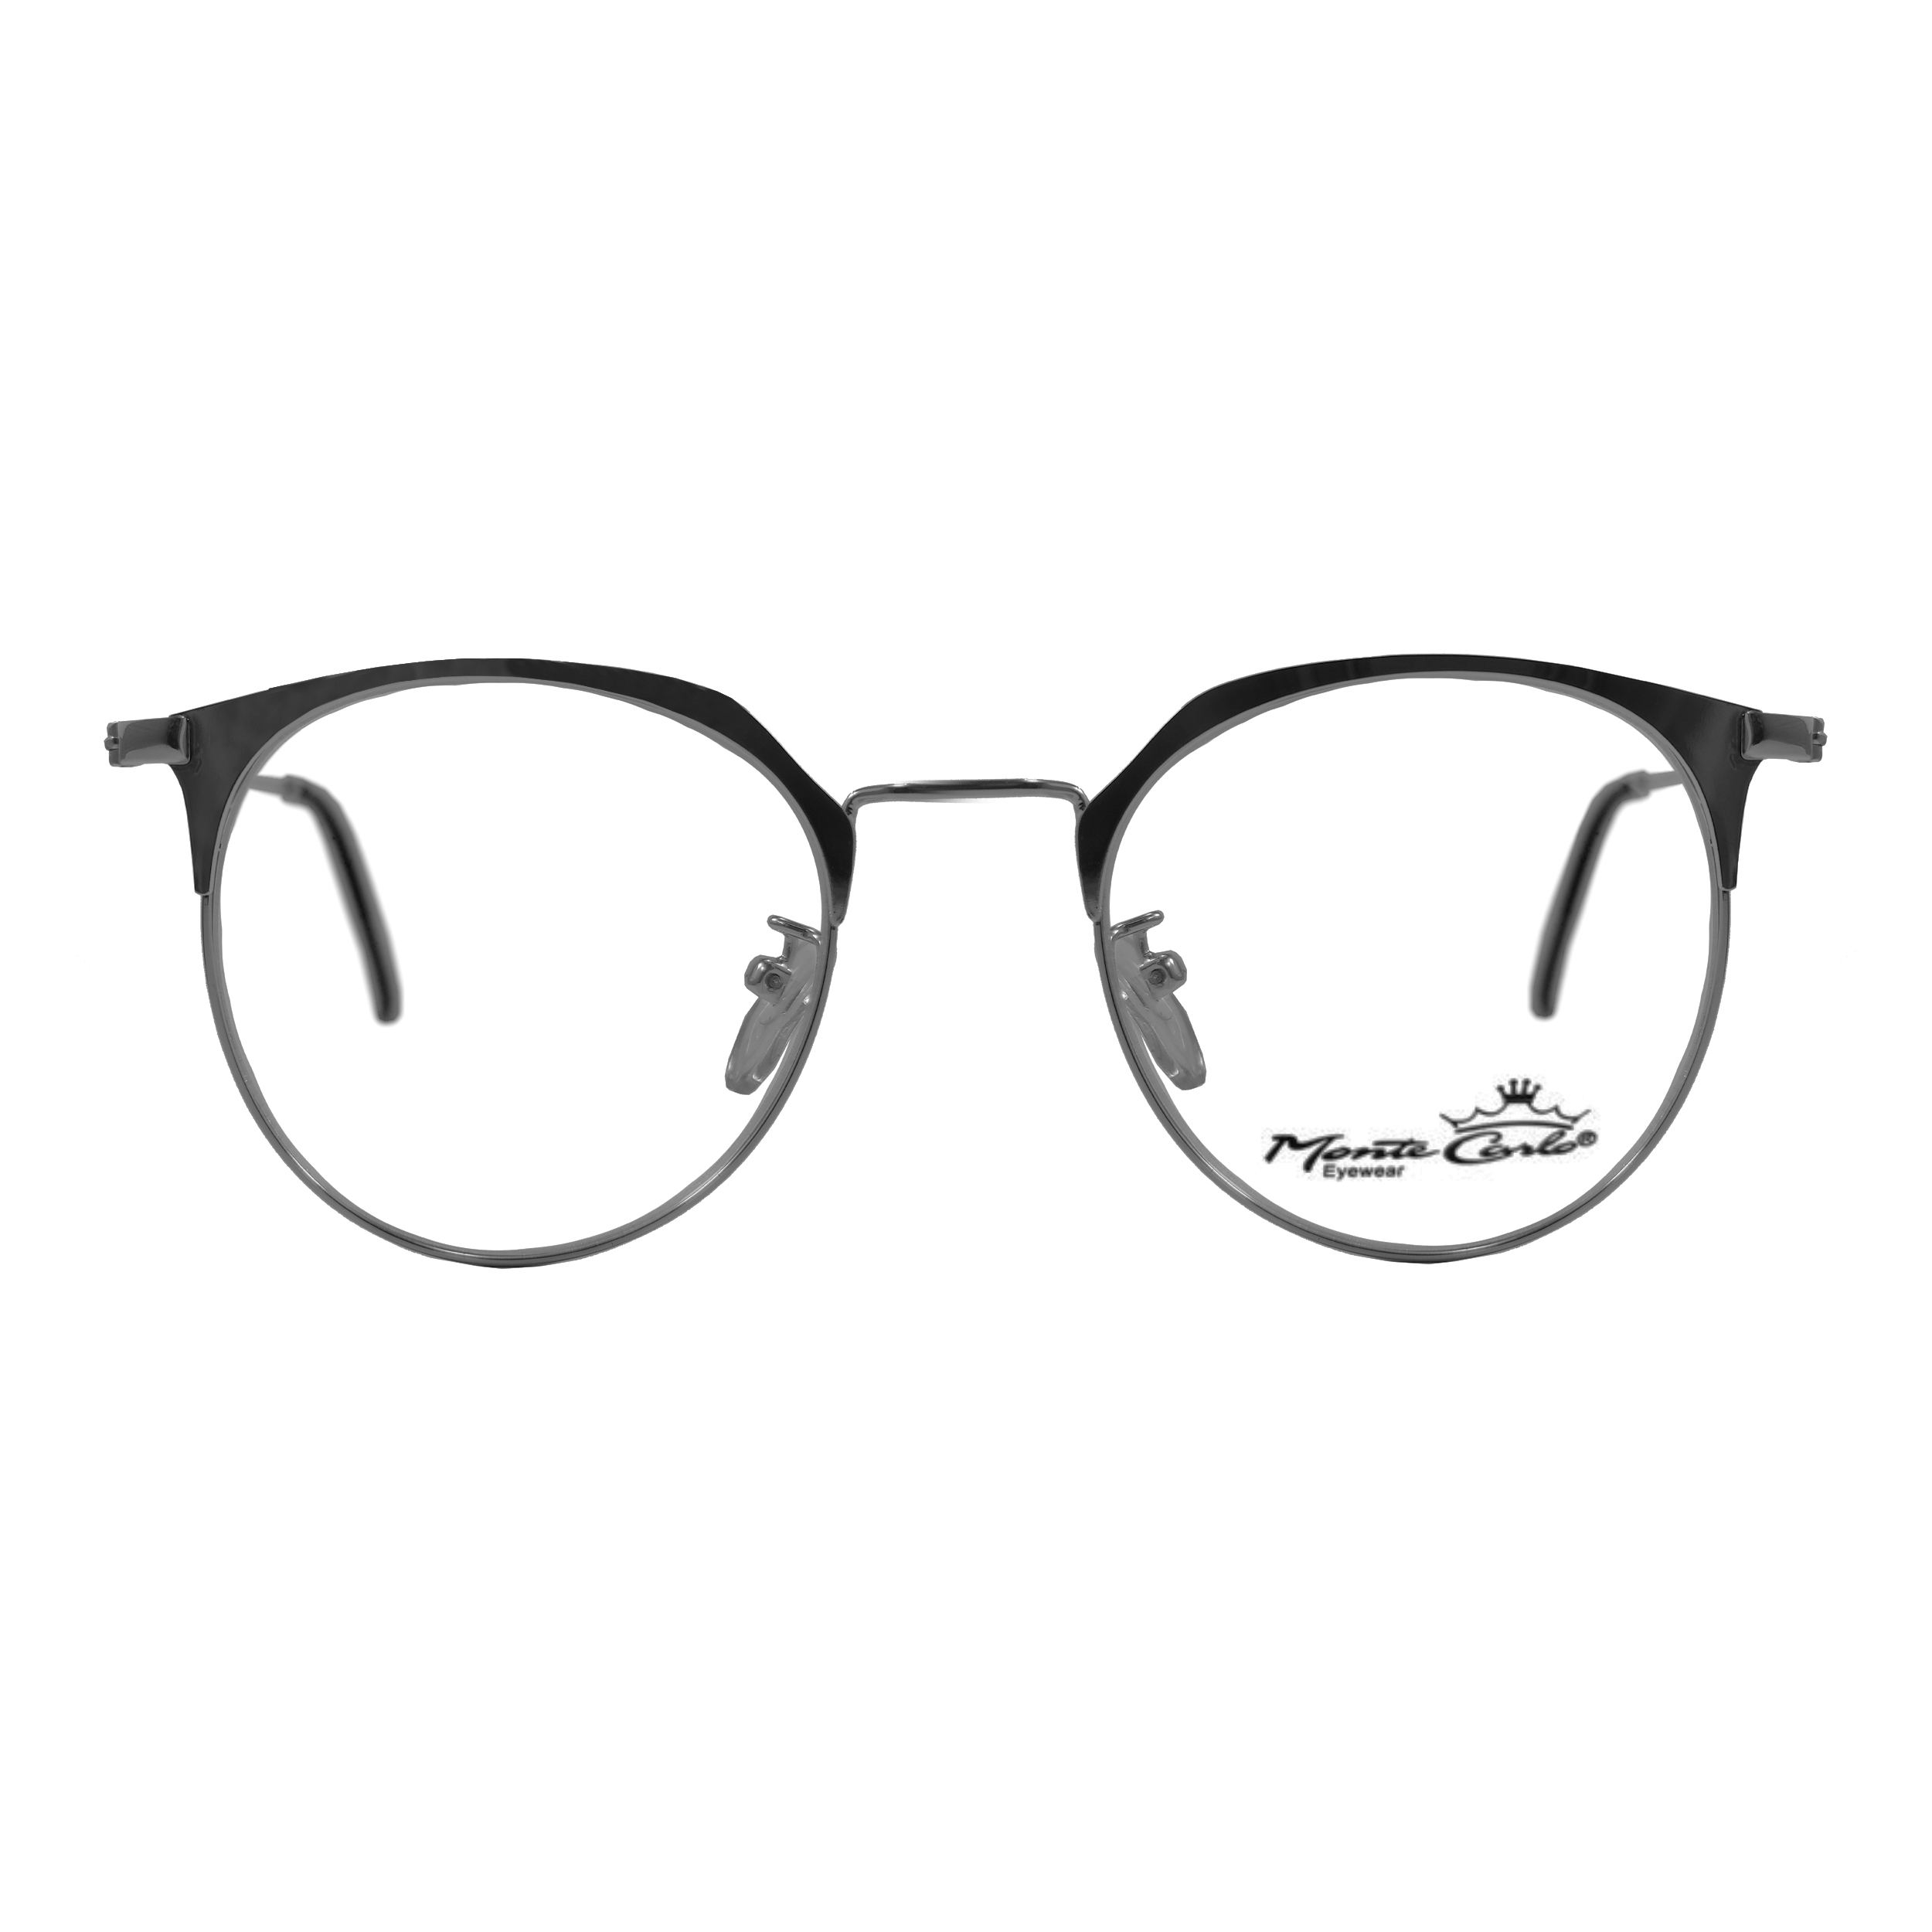 فریم عینک طبی مونته کارلو مدل  3216 کد 113